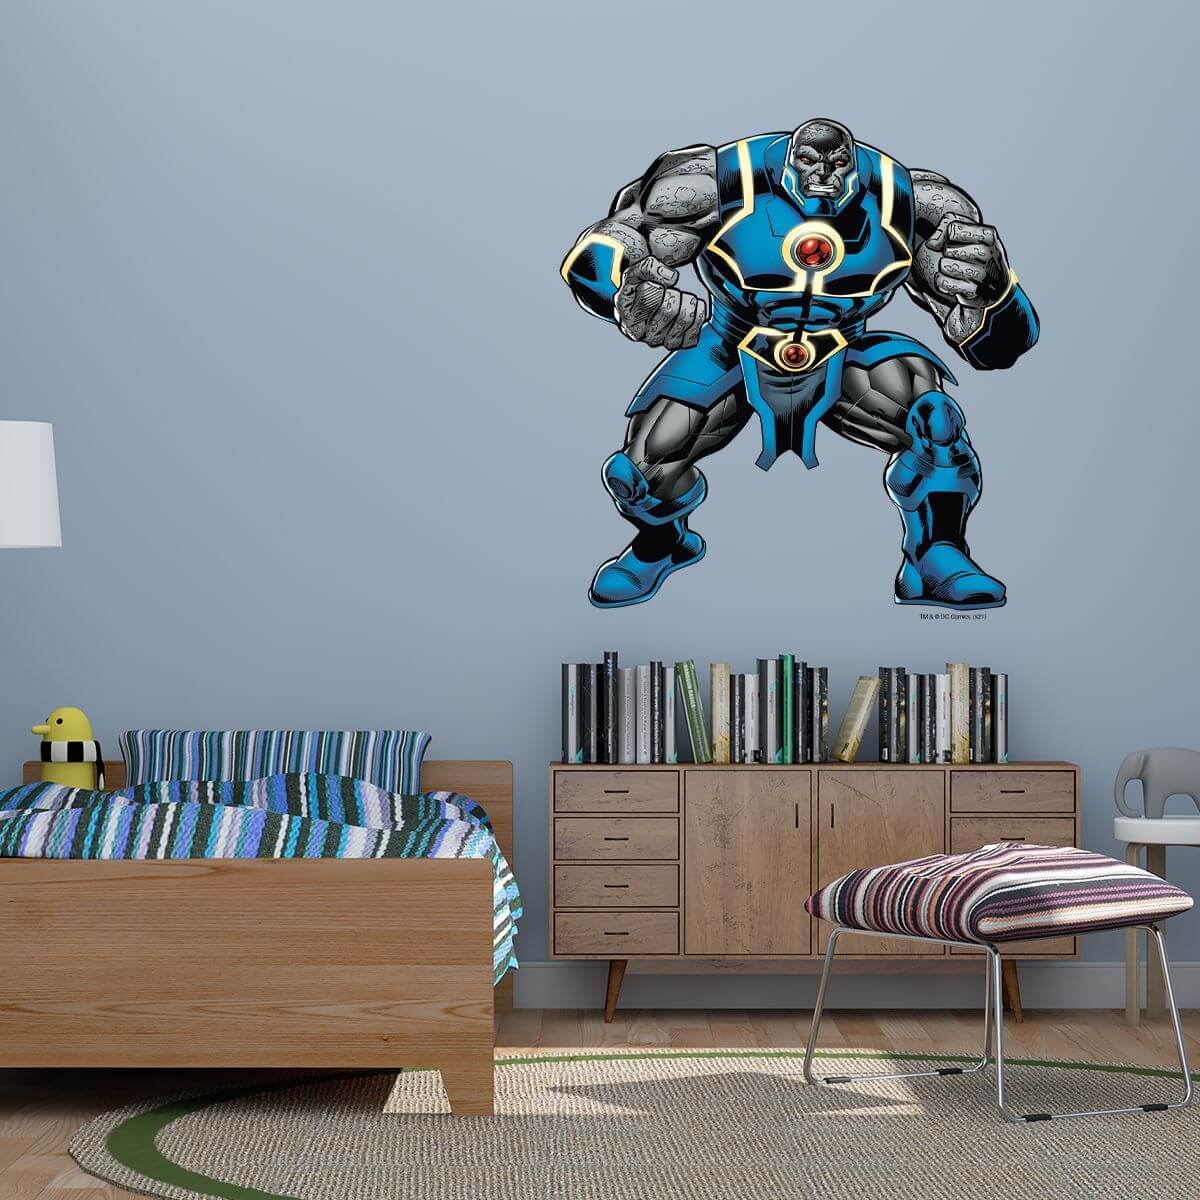 Kismet Decals Darkseid of Apokolips Licensed Wall Sticker - Easy DIY Justice League Home & Room Decor Wall Art - Kismet Decals